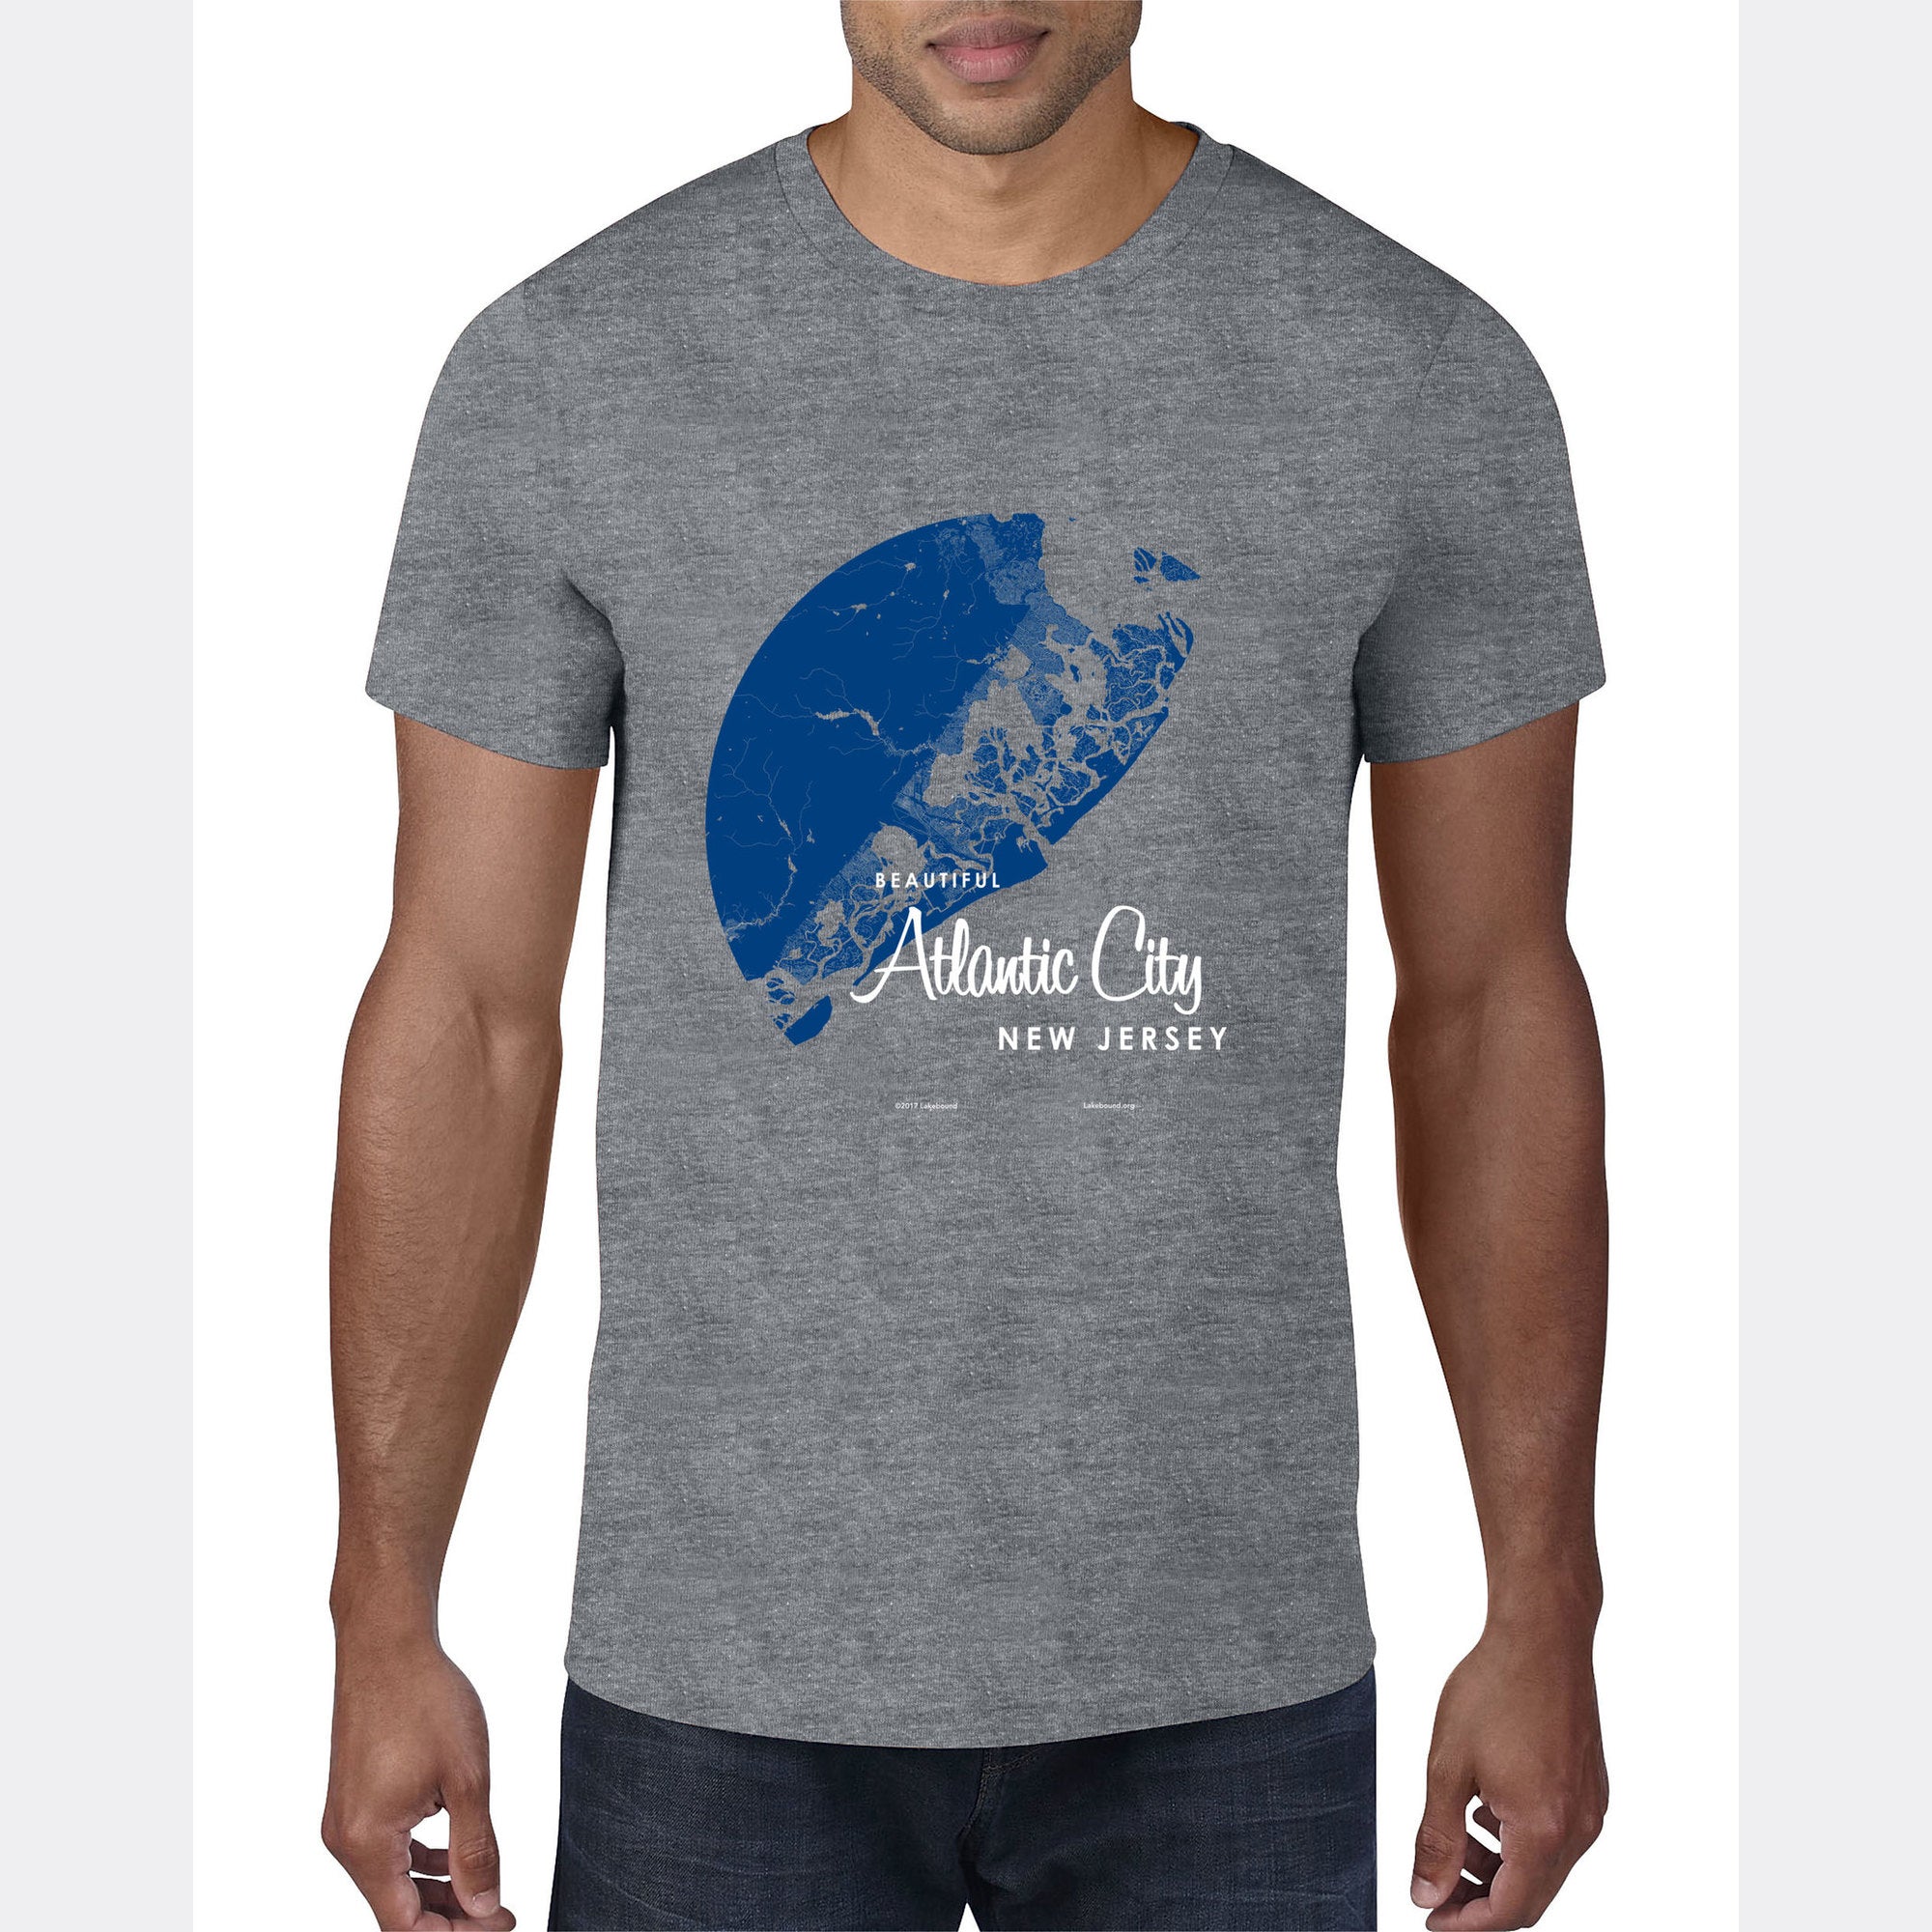 Atlantic City New Jersey, T-Shirt